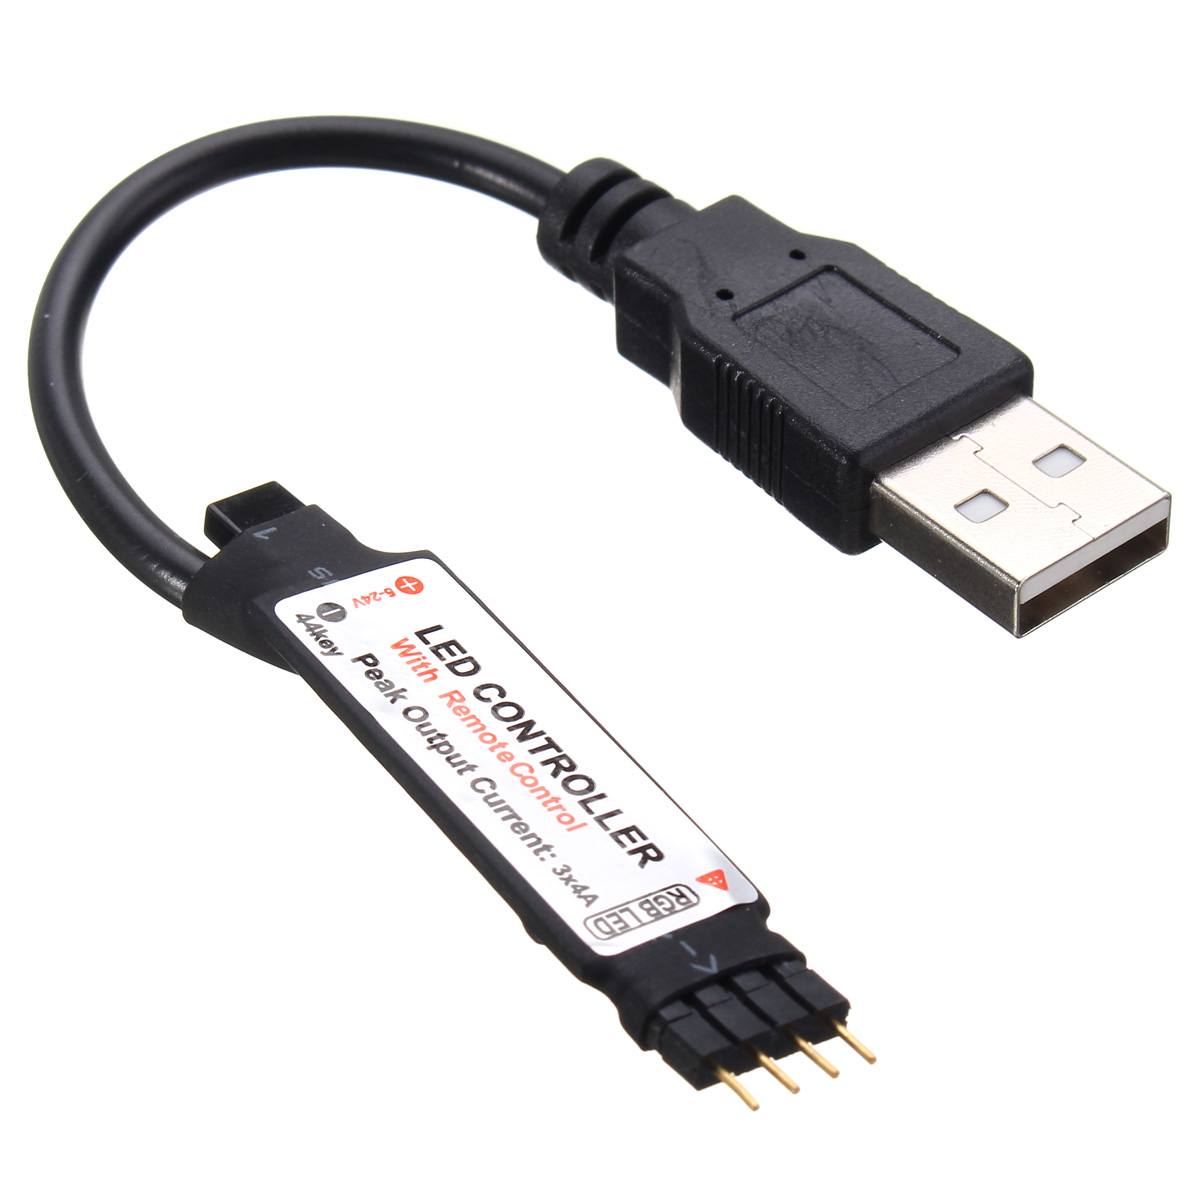 24-Keys-USB-LED-Controller-with-Remote-Control-for-DC5V-5050-RGB-Strip-Light-1164336